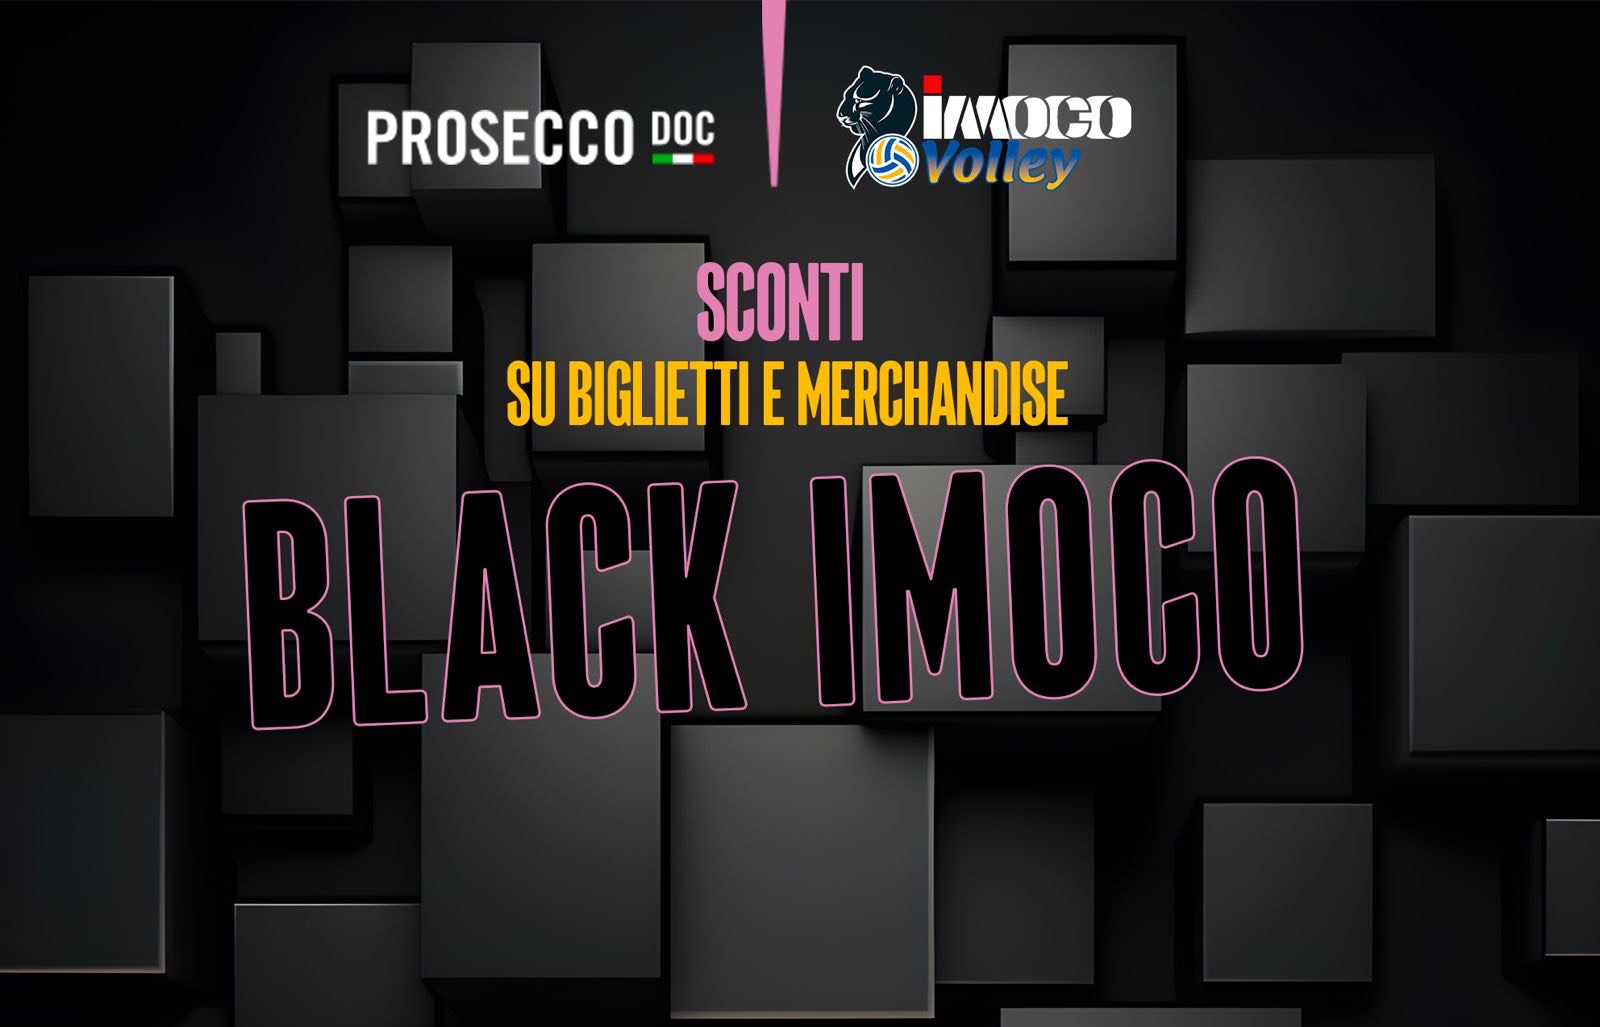 Black Imoco